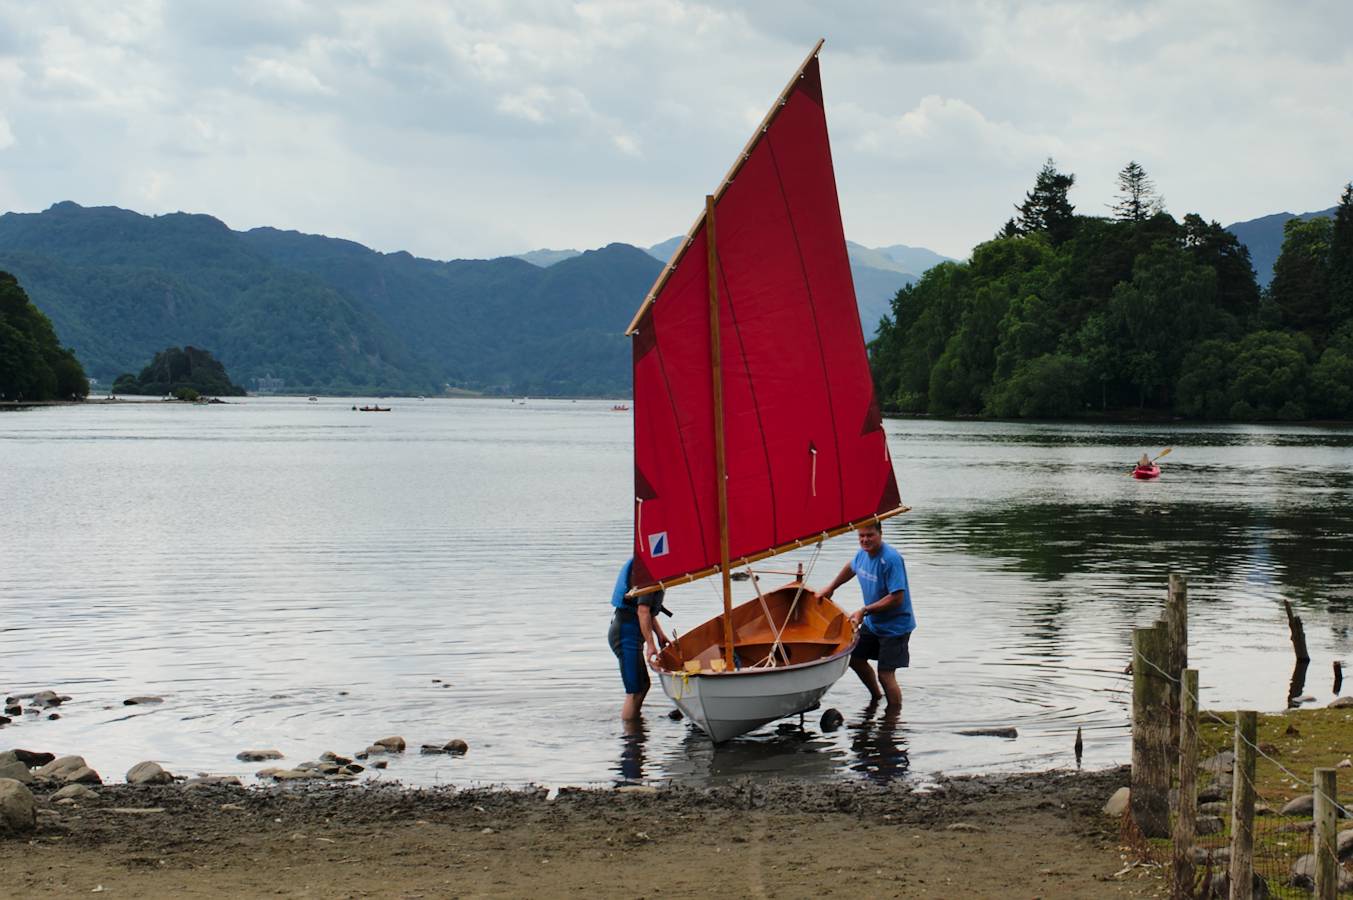 Kit-built wooden sailing dinghy - Skerry